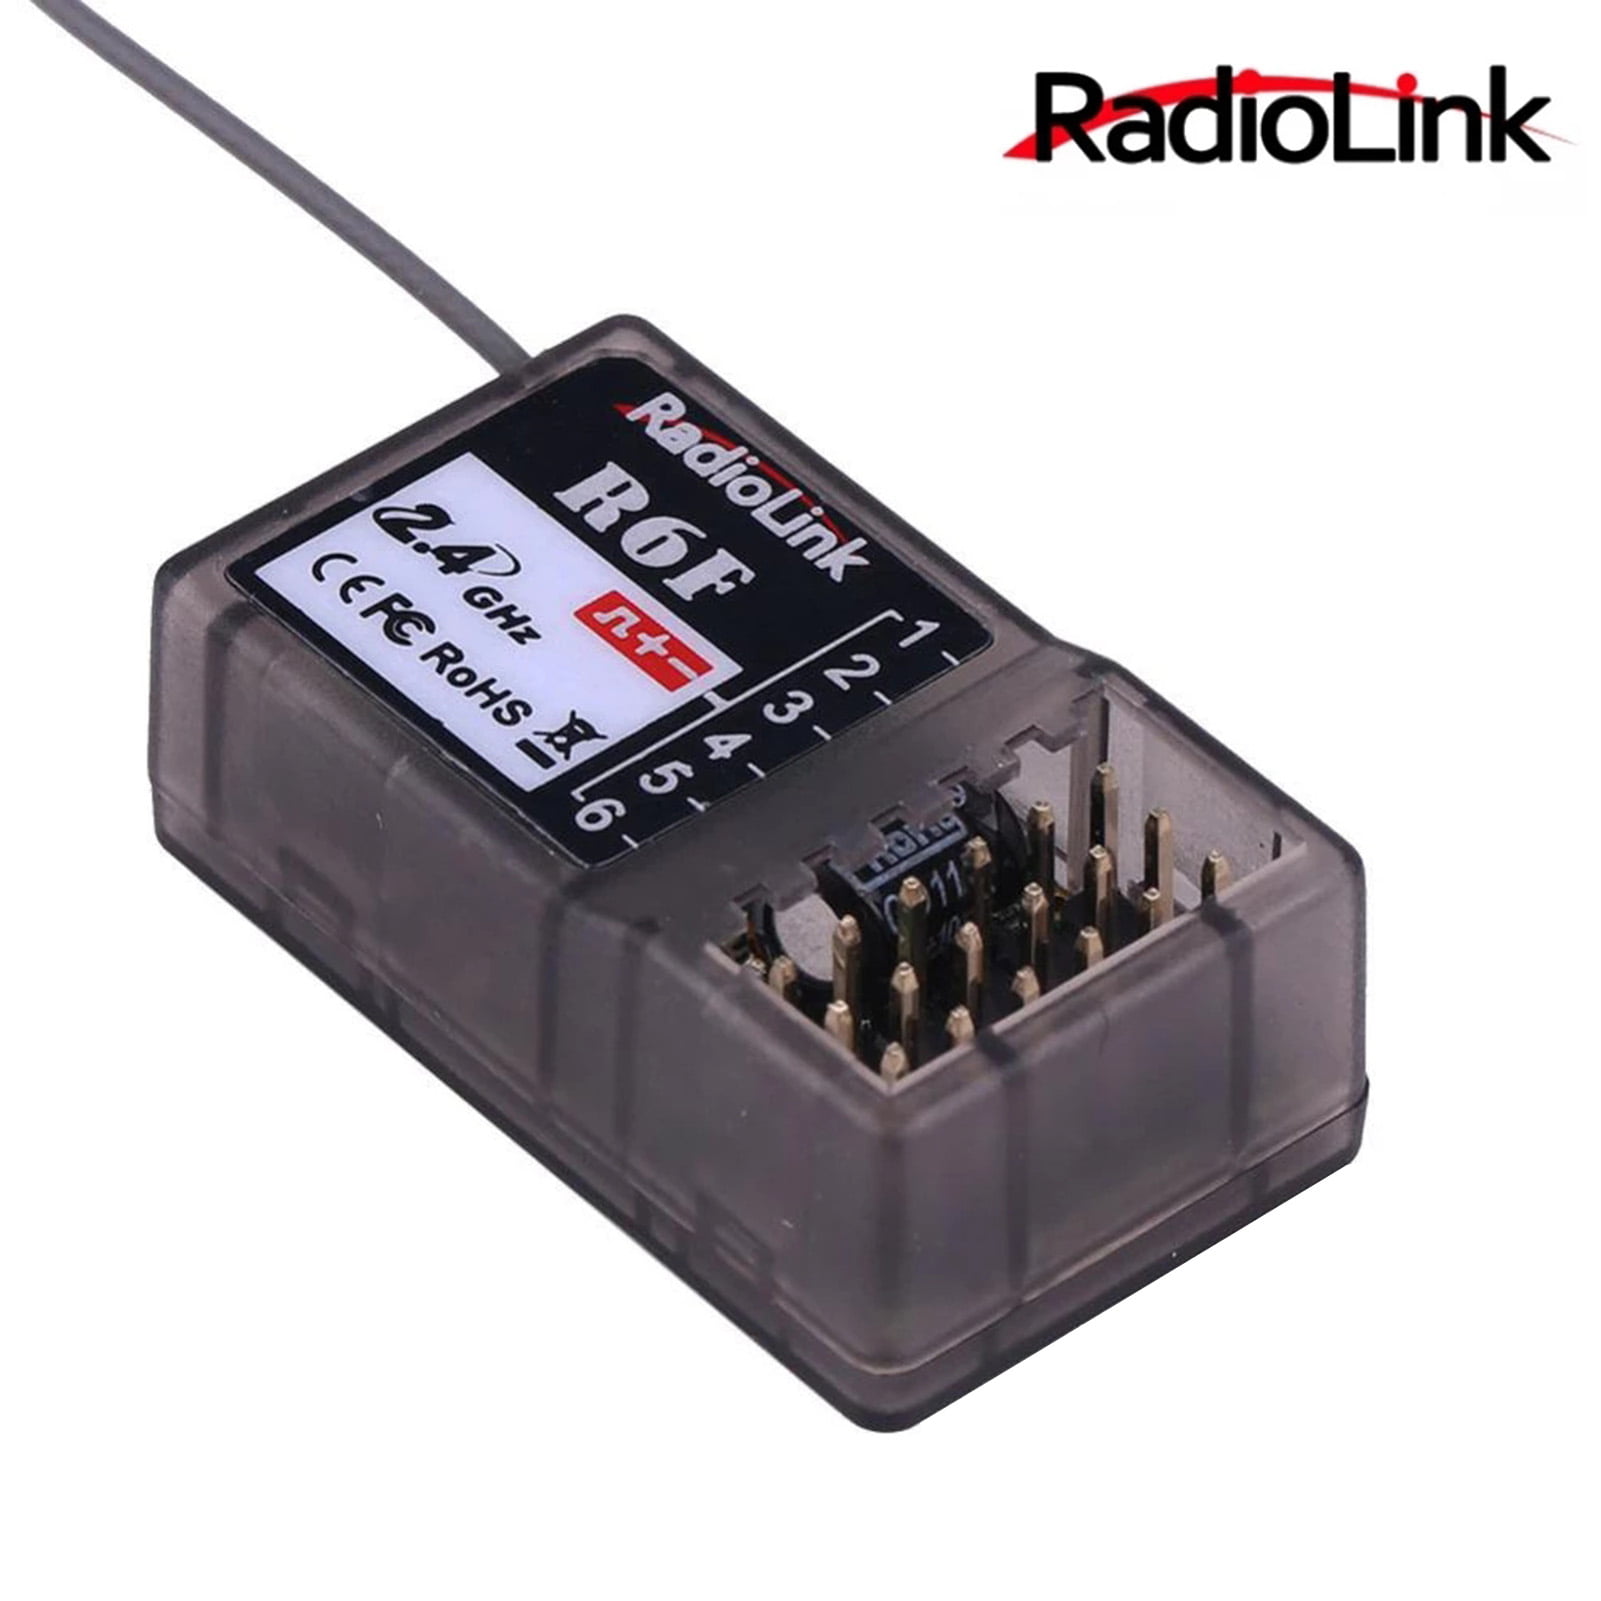 For Radiolink RC6GS 2.4G 6CH Radio Control System RC4GS RX Receiver Accessory 